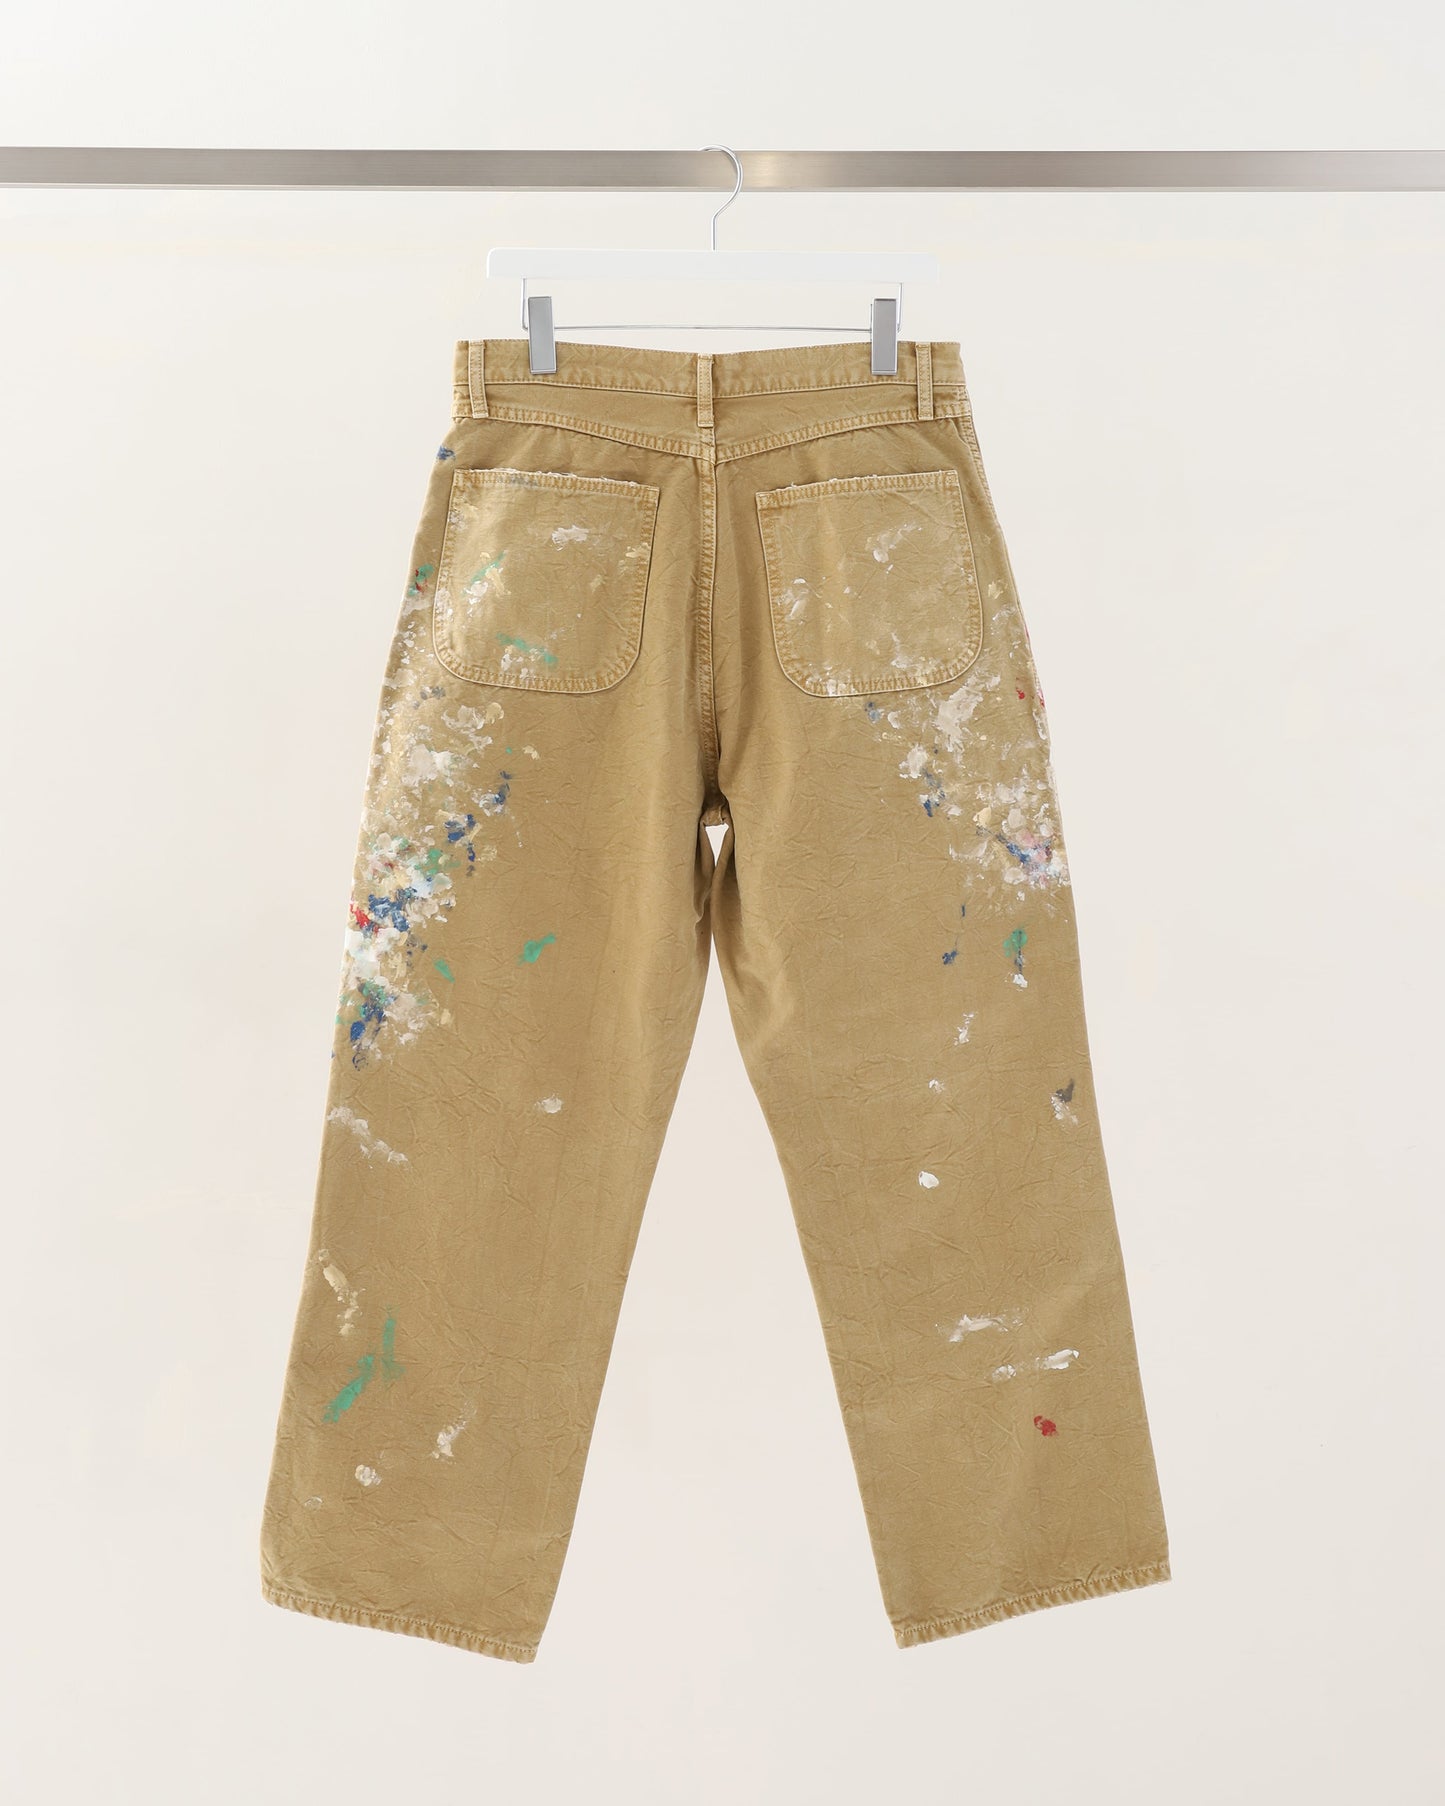 Splash Painter pants